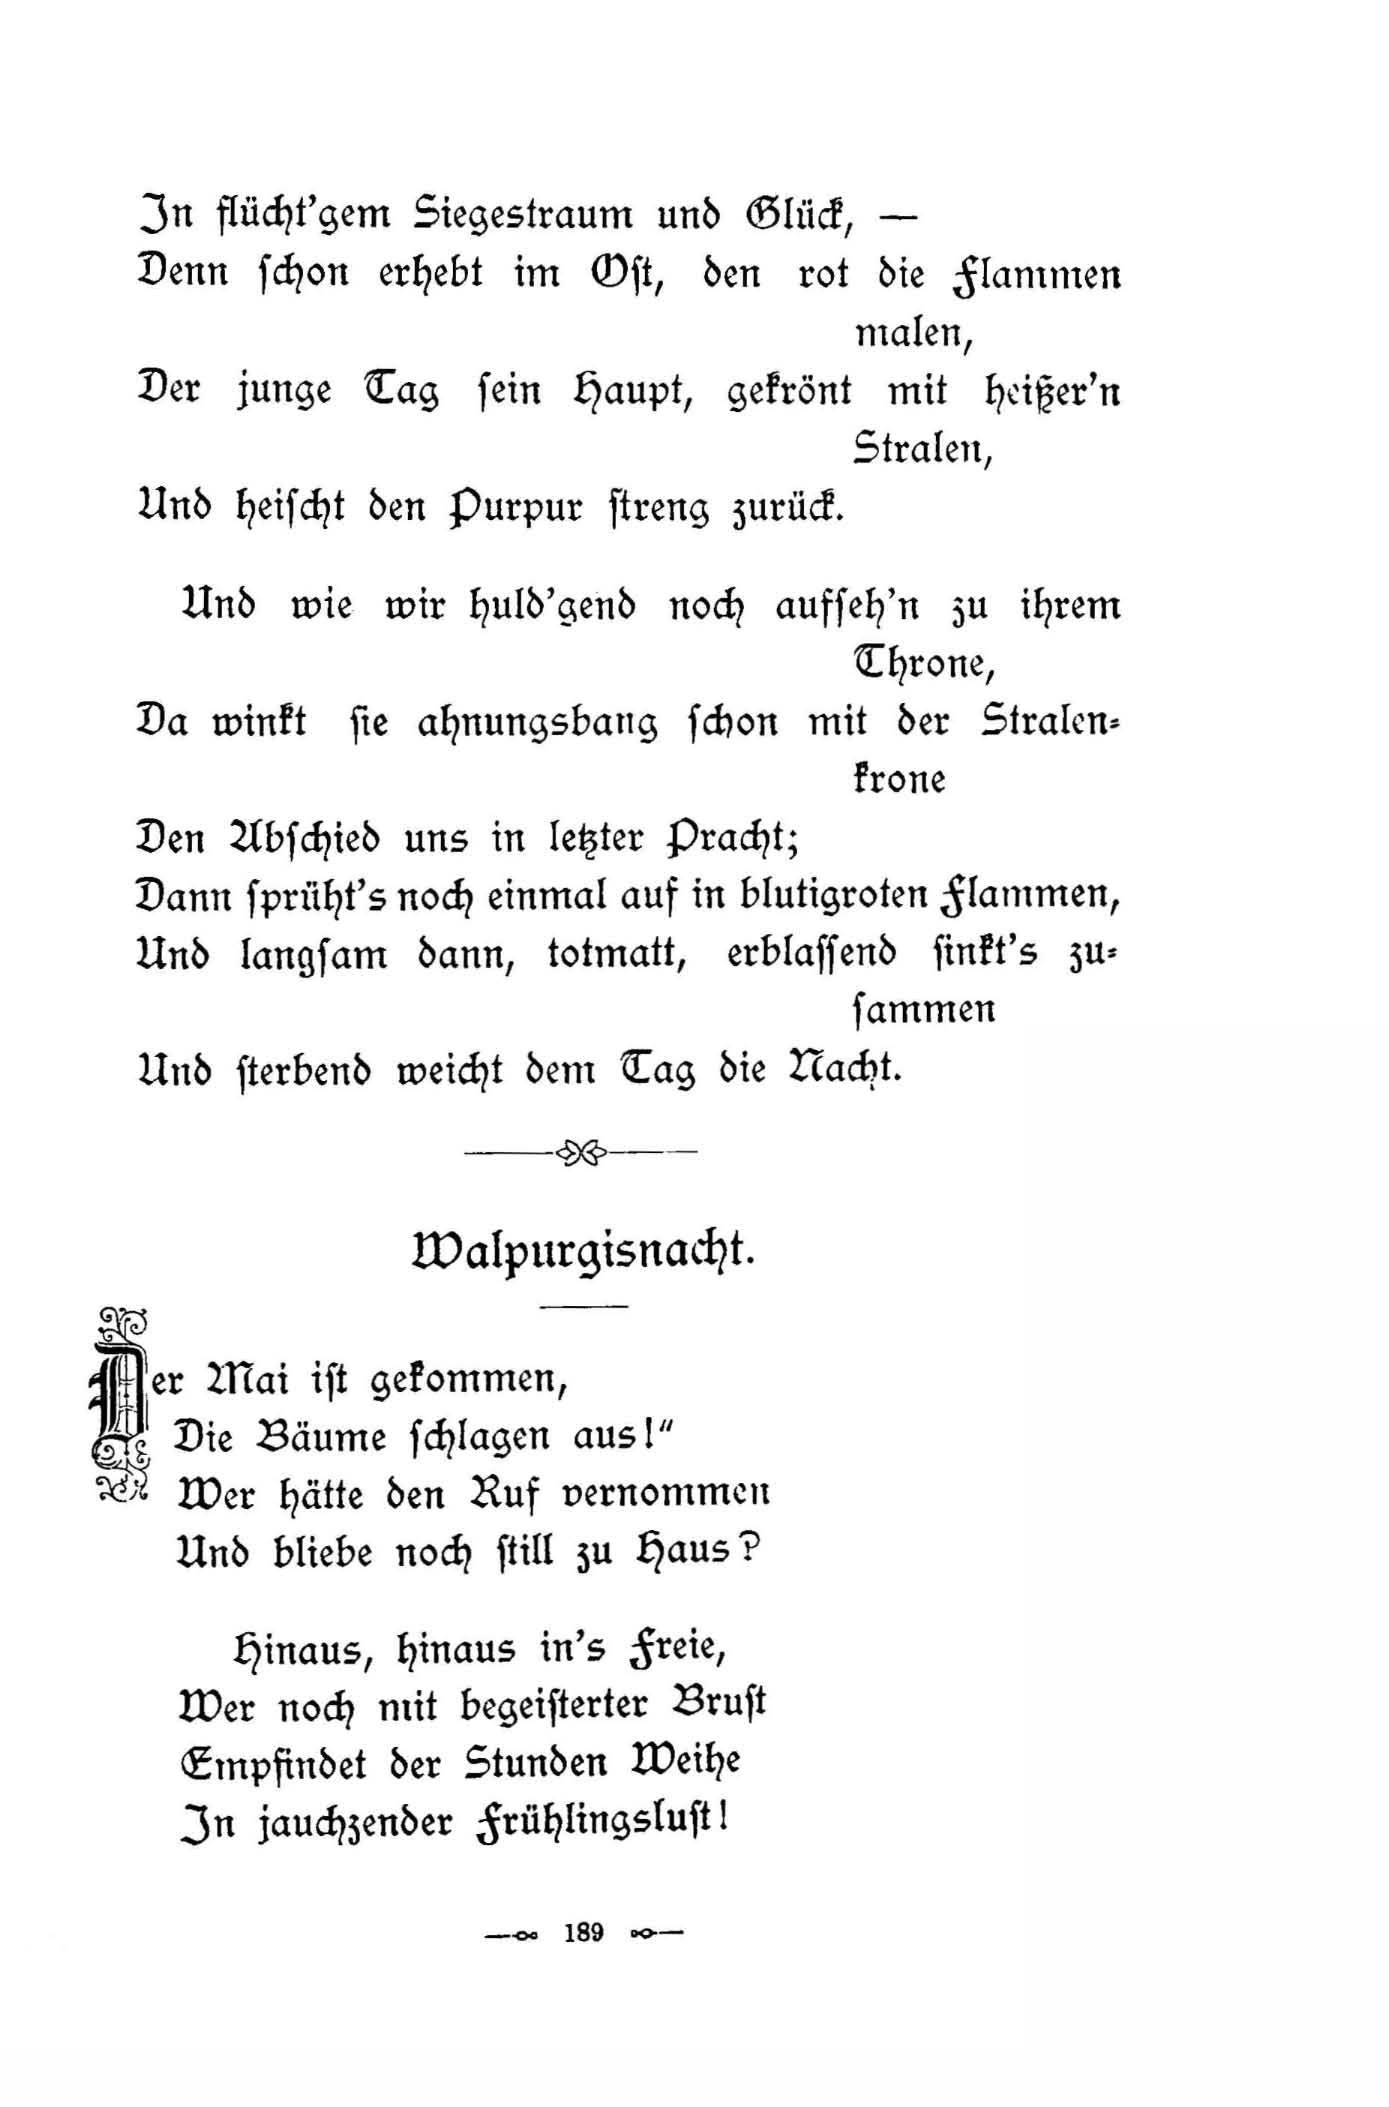 Walpurgisnacht (1896) | 1. (189) Main body of text